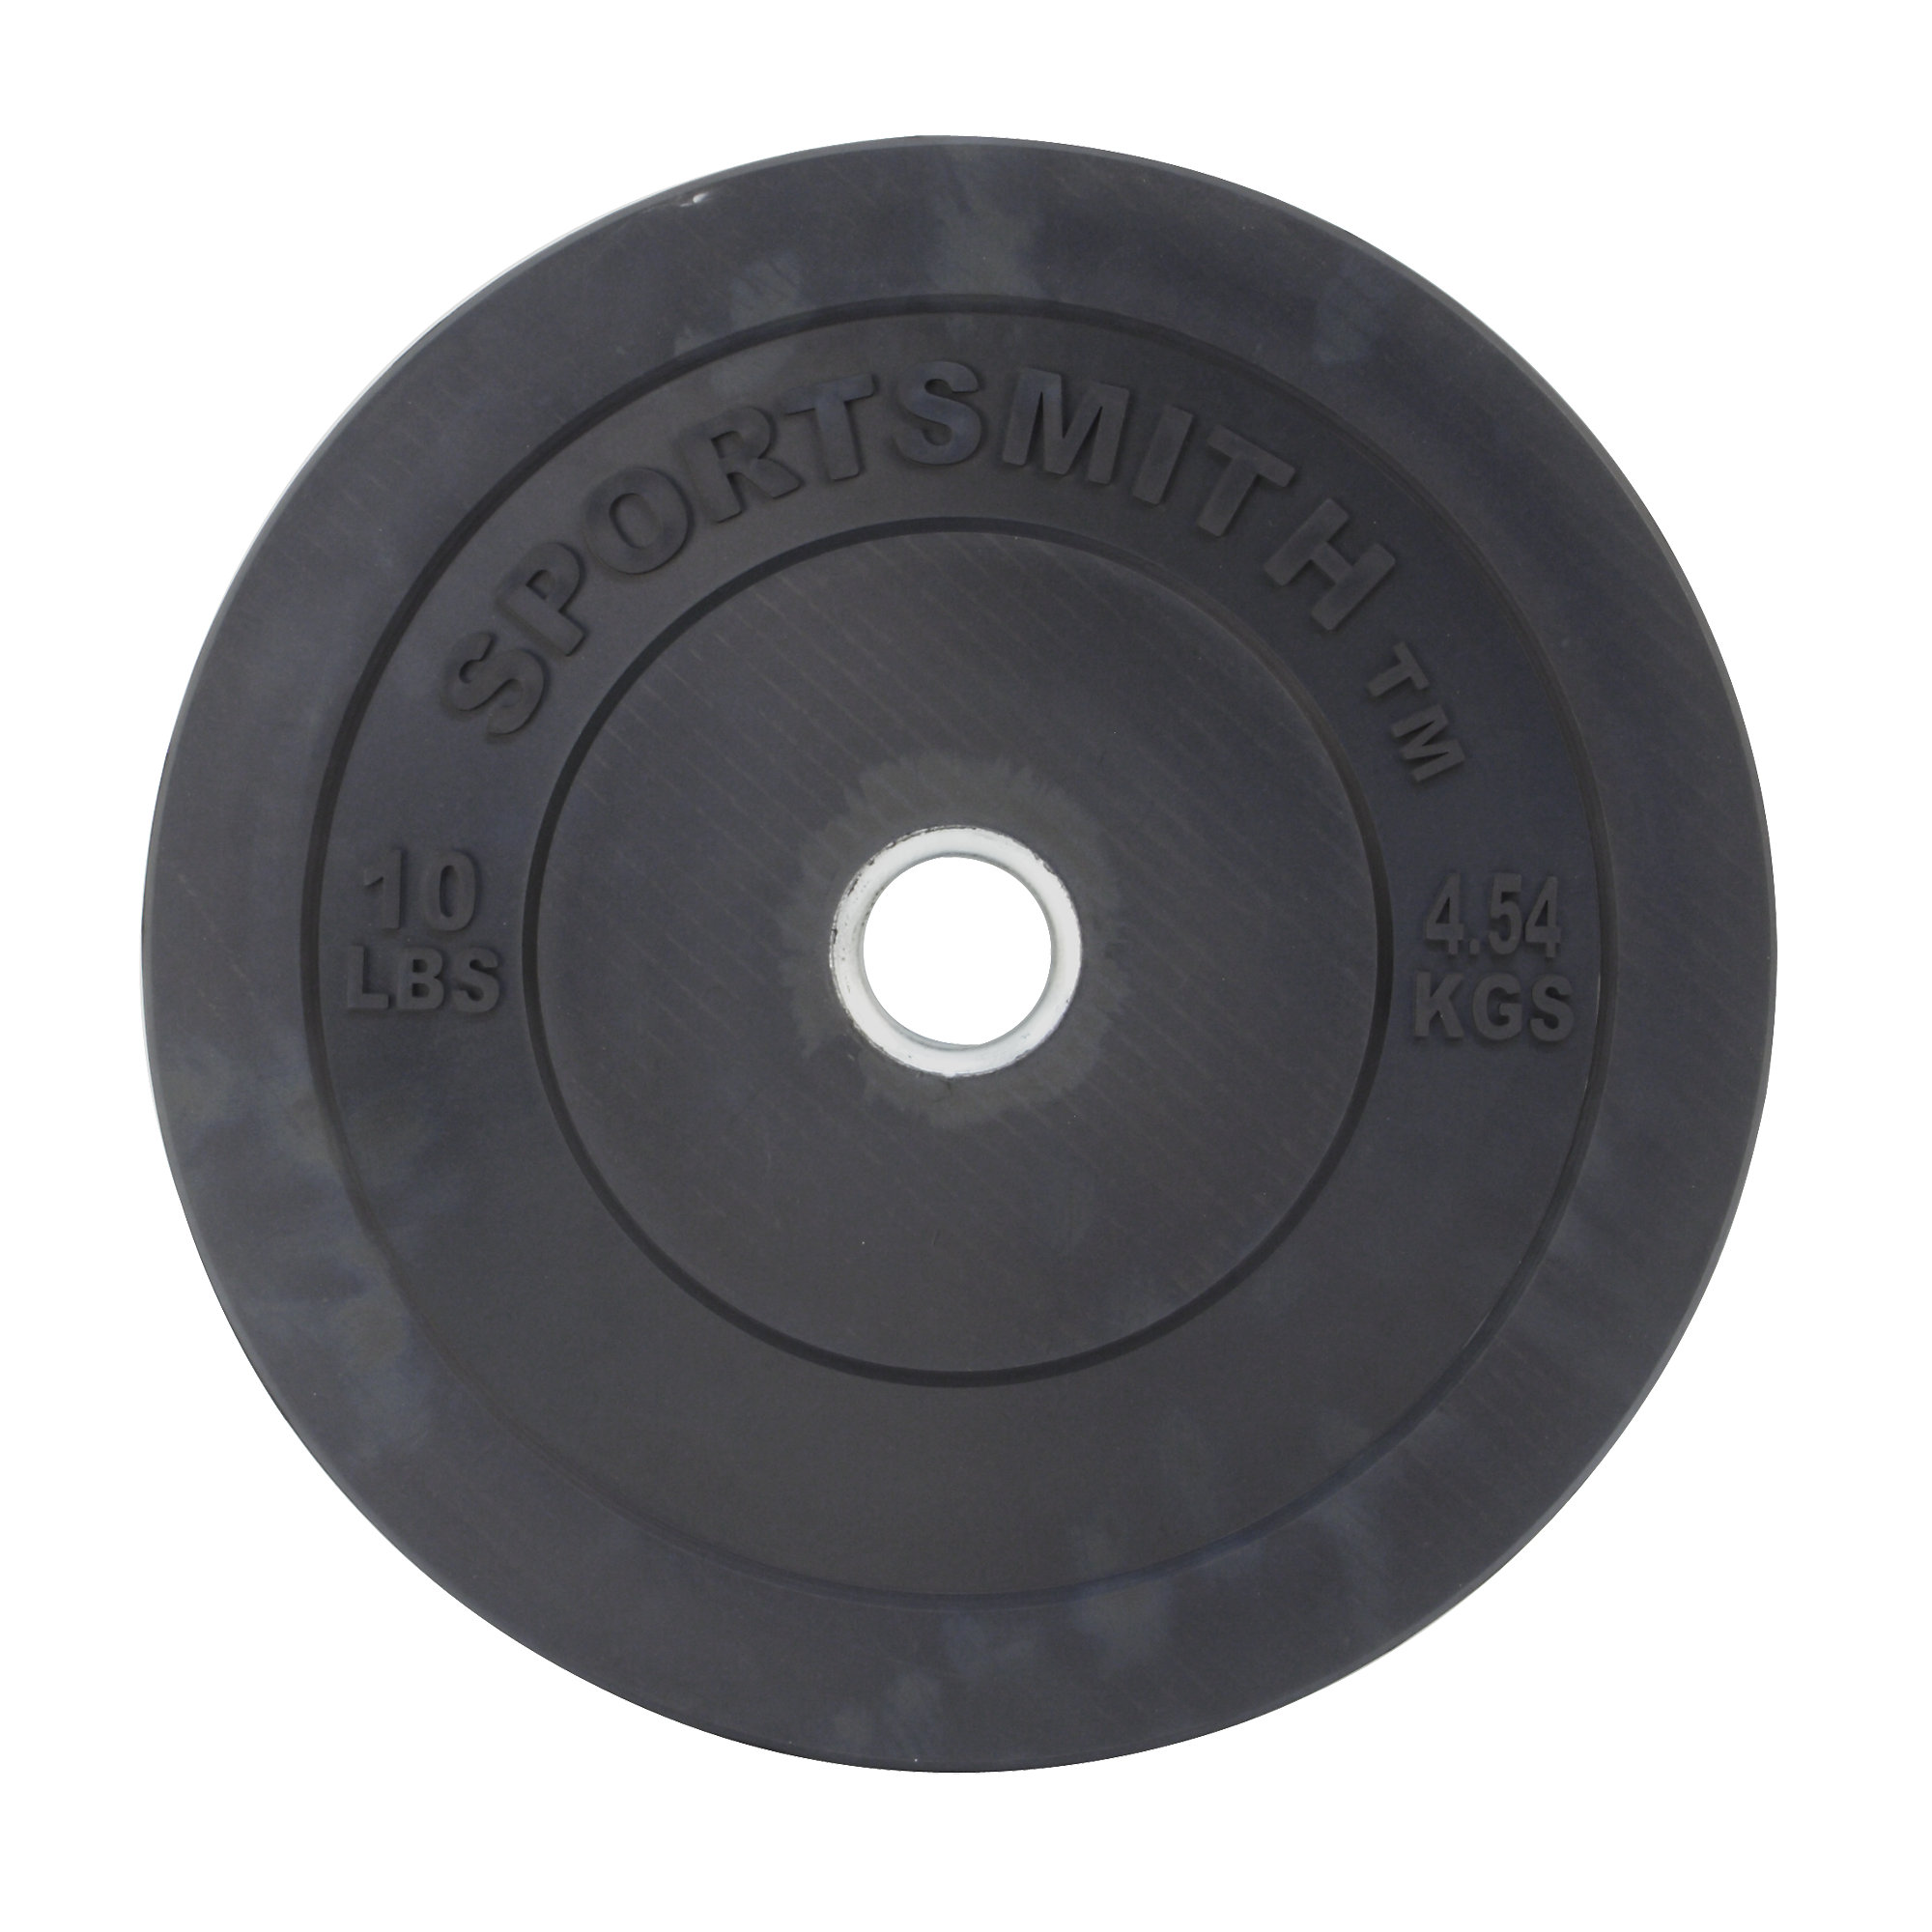 Premium Olympic Rubber Bumper Plate, Sportsmith, 10lb, Black